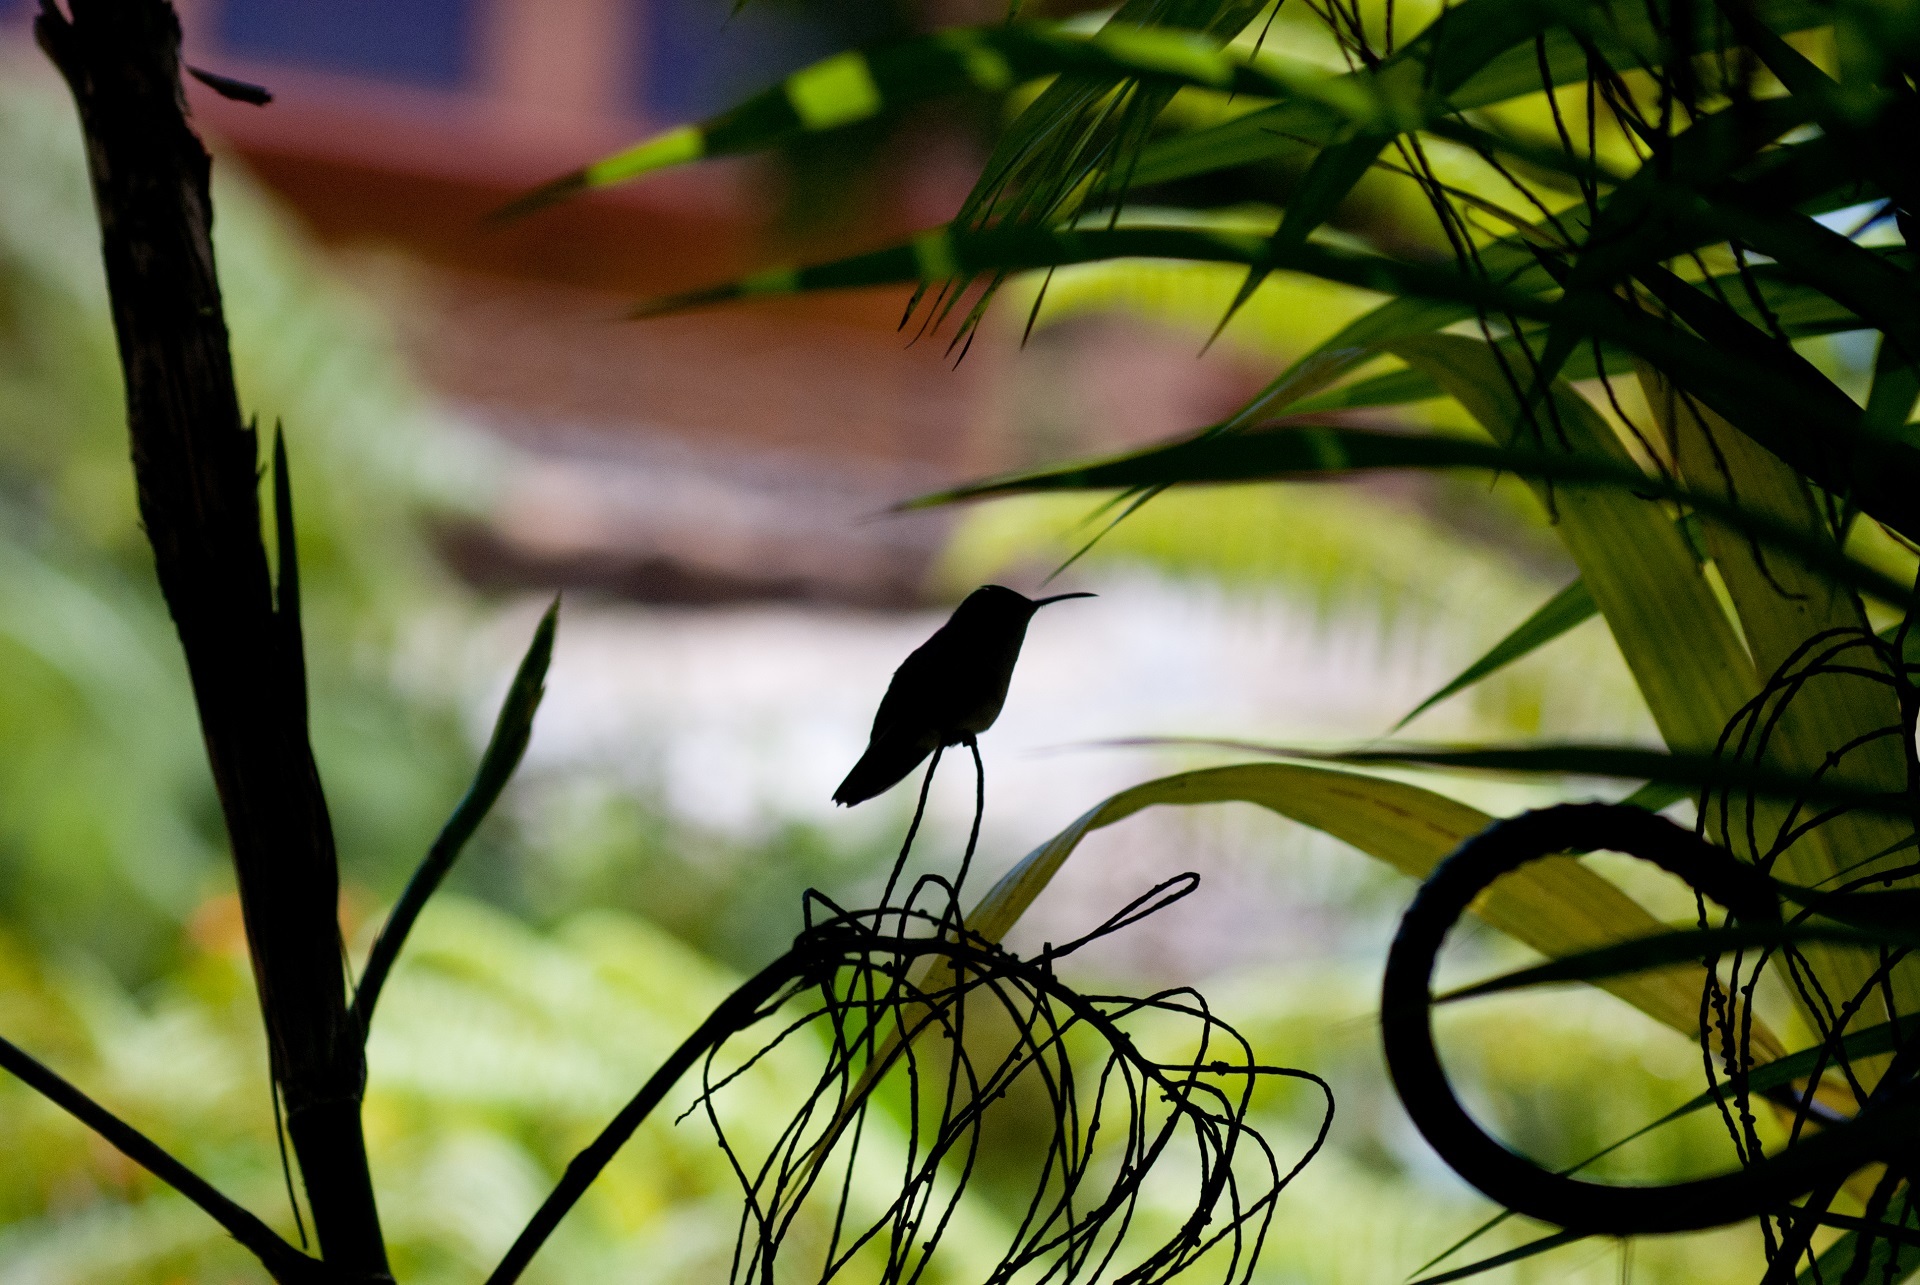 Hummingbird on the branch photo